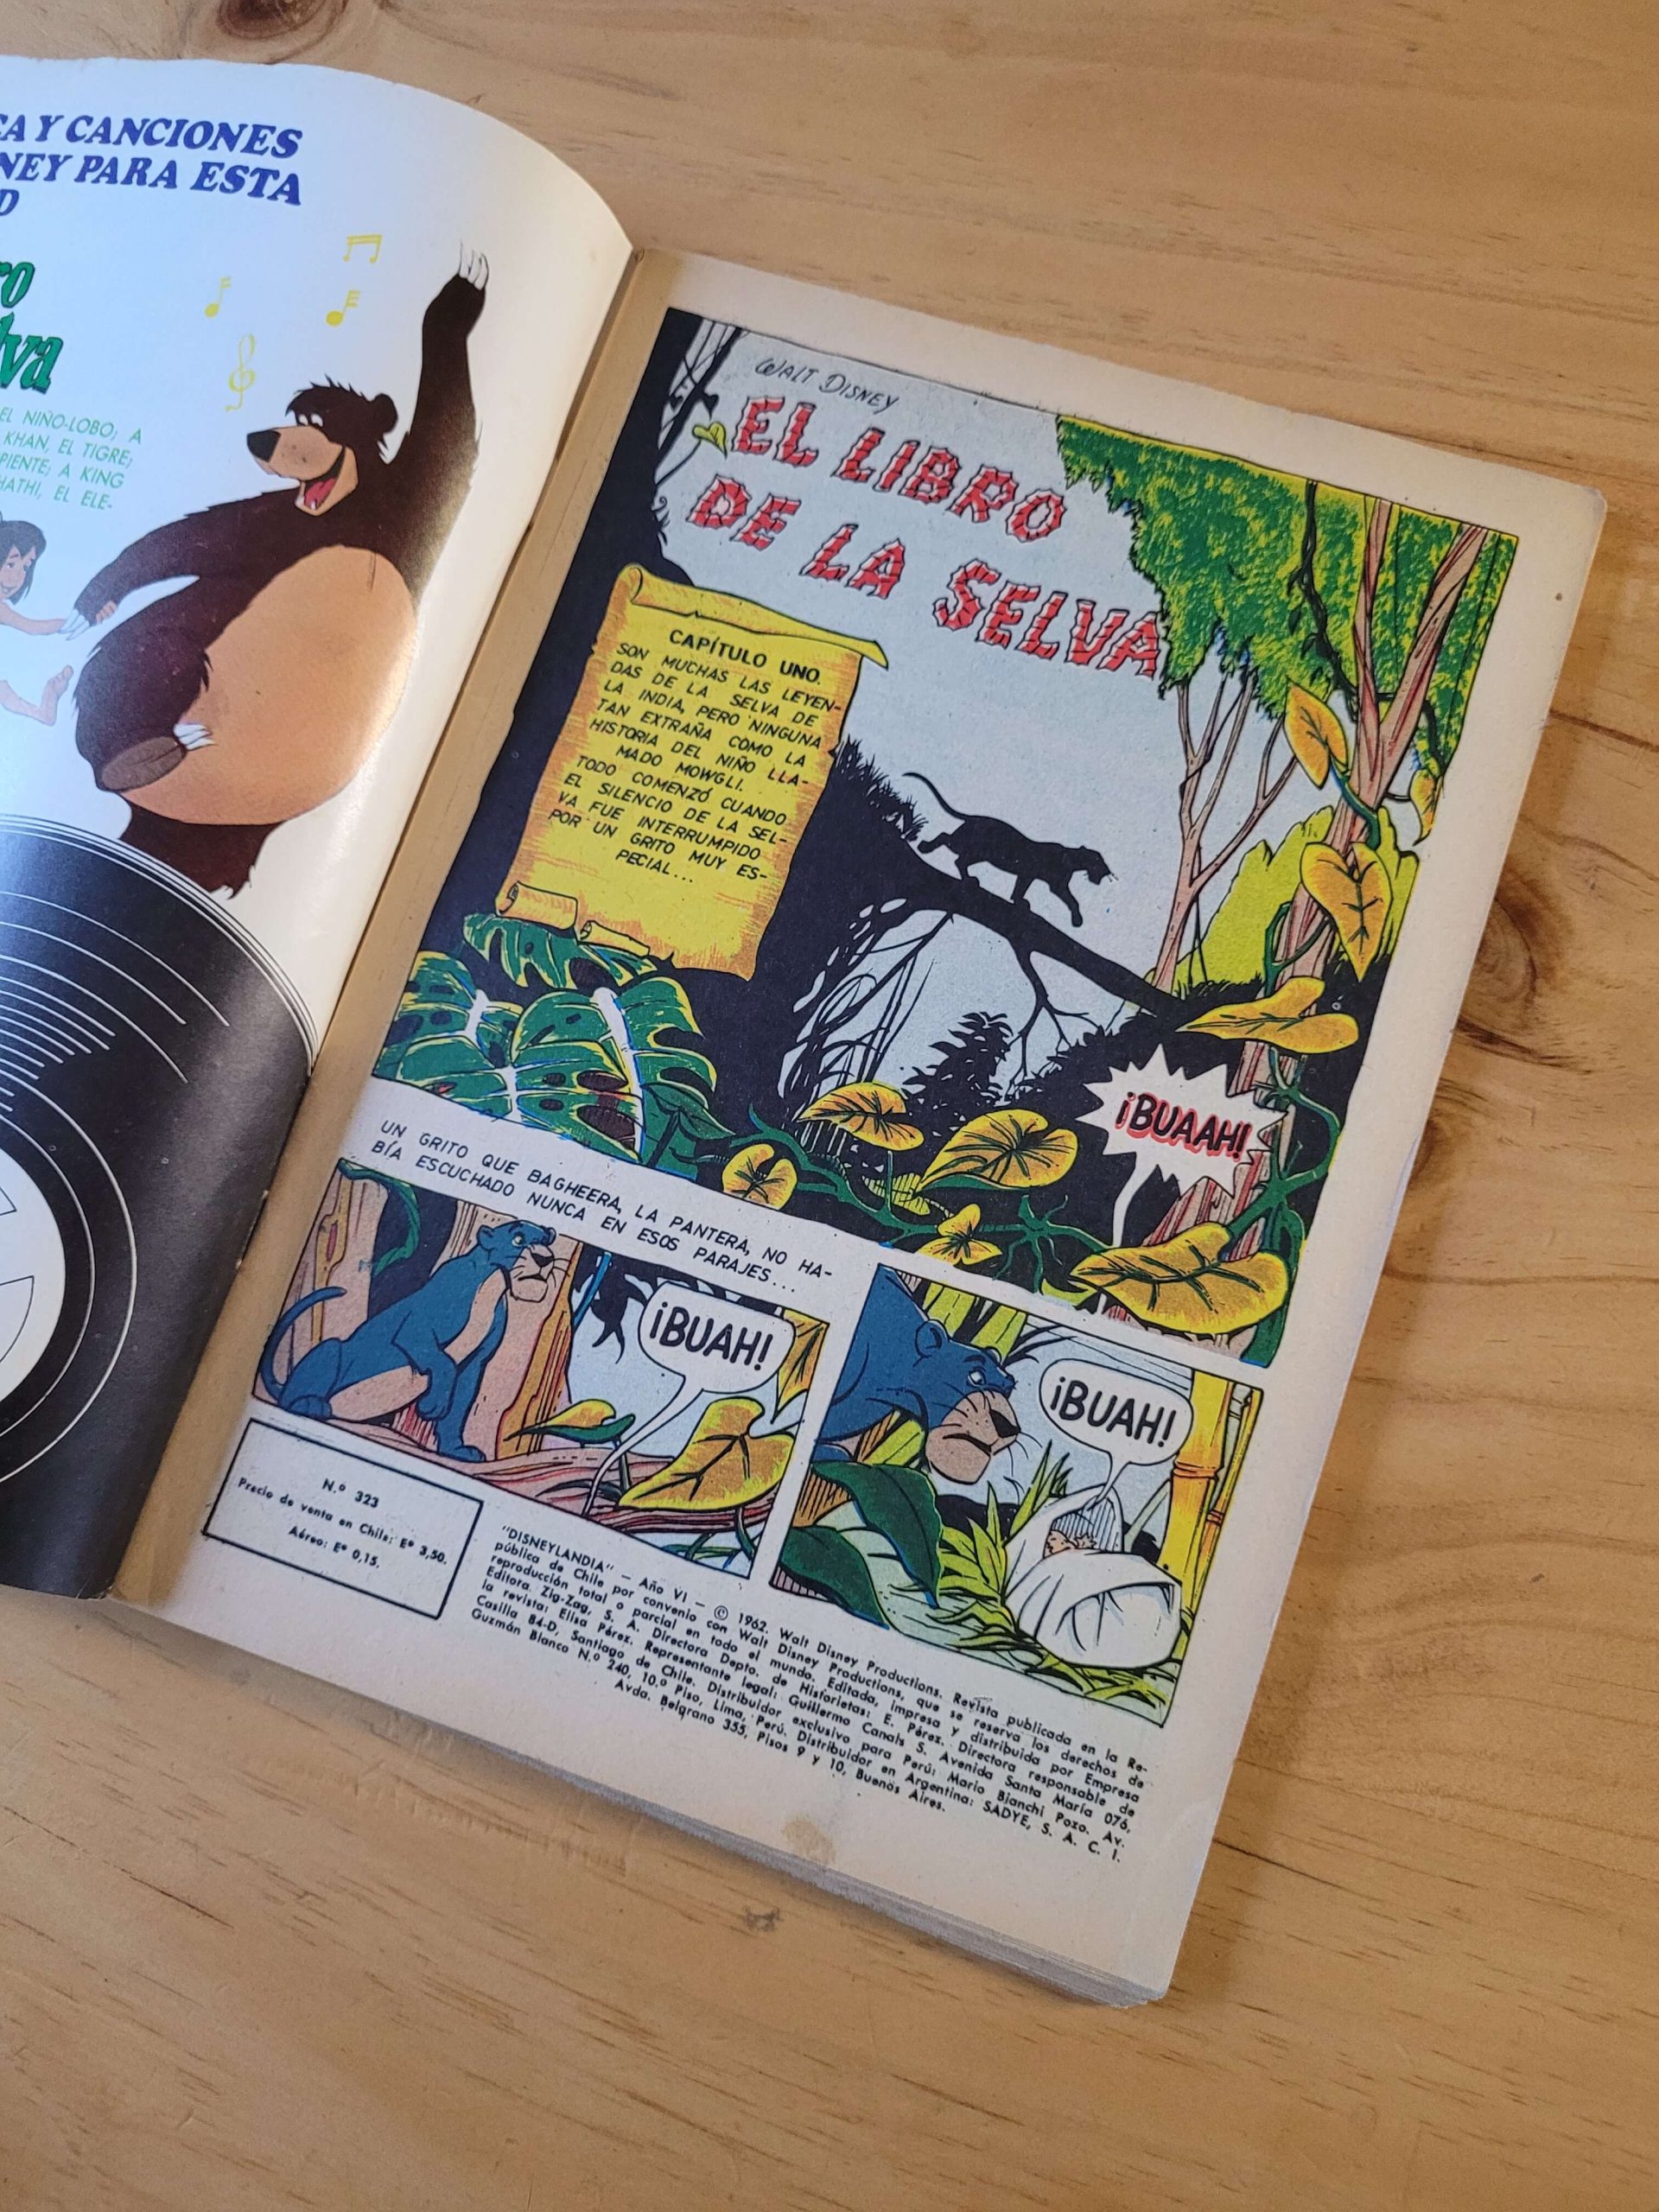 (1962) Revista DISNEYLANDIA especial El Libro de la Selva